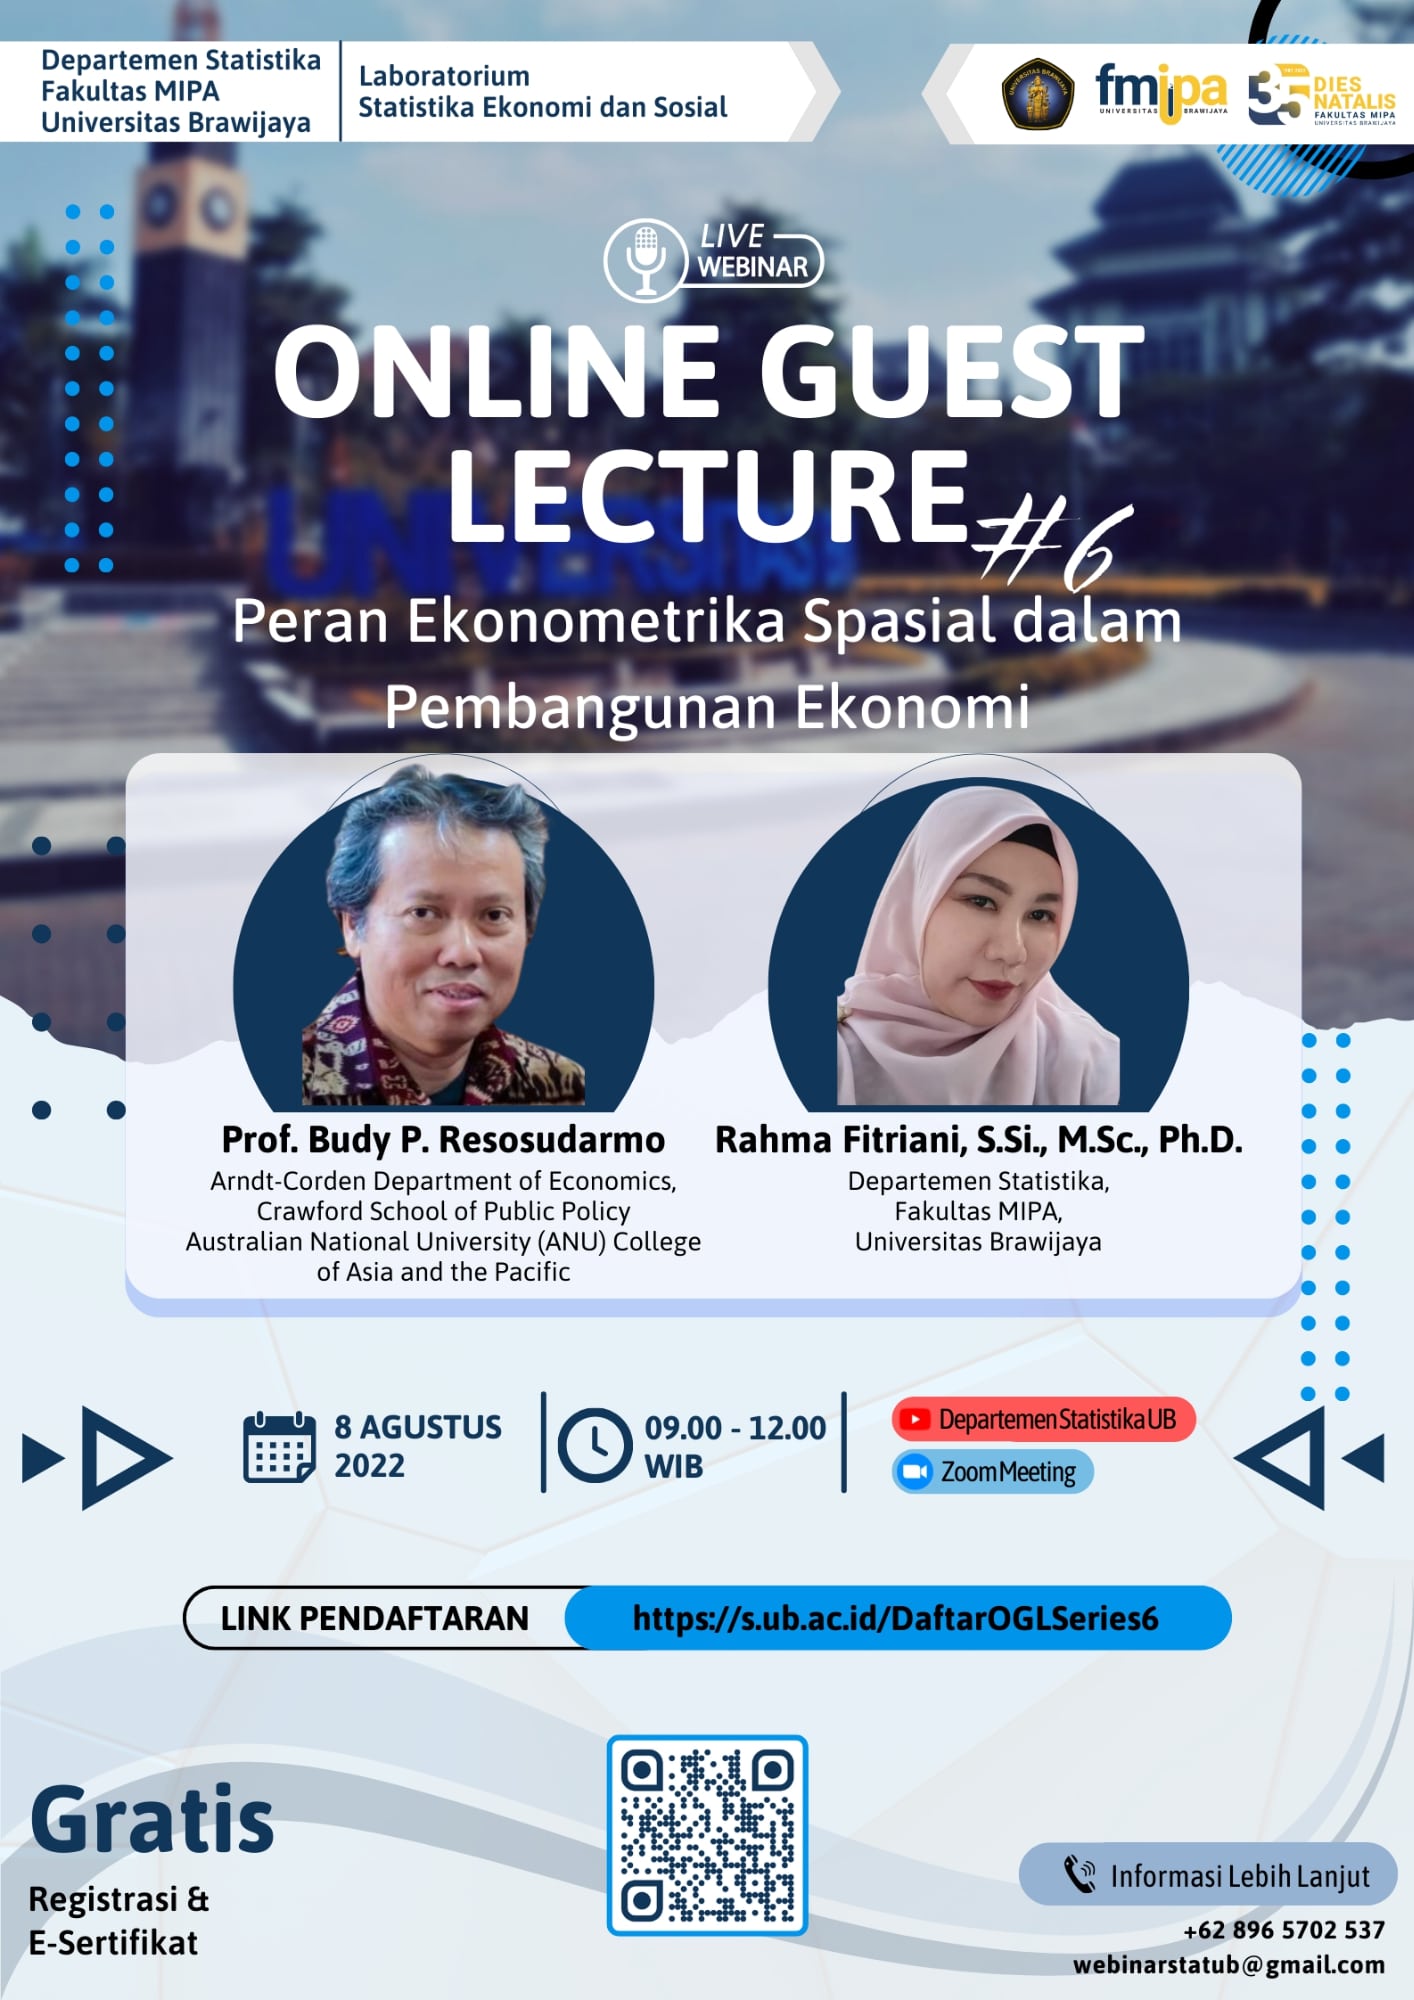 Online Guest Lecture (OGL) #6